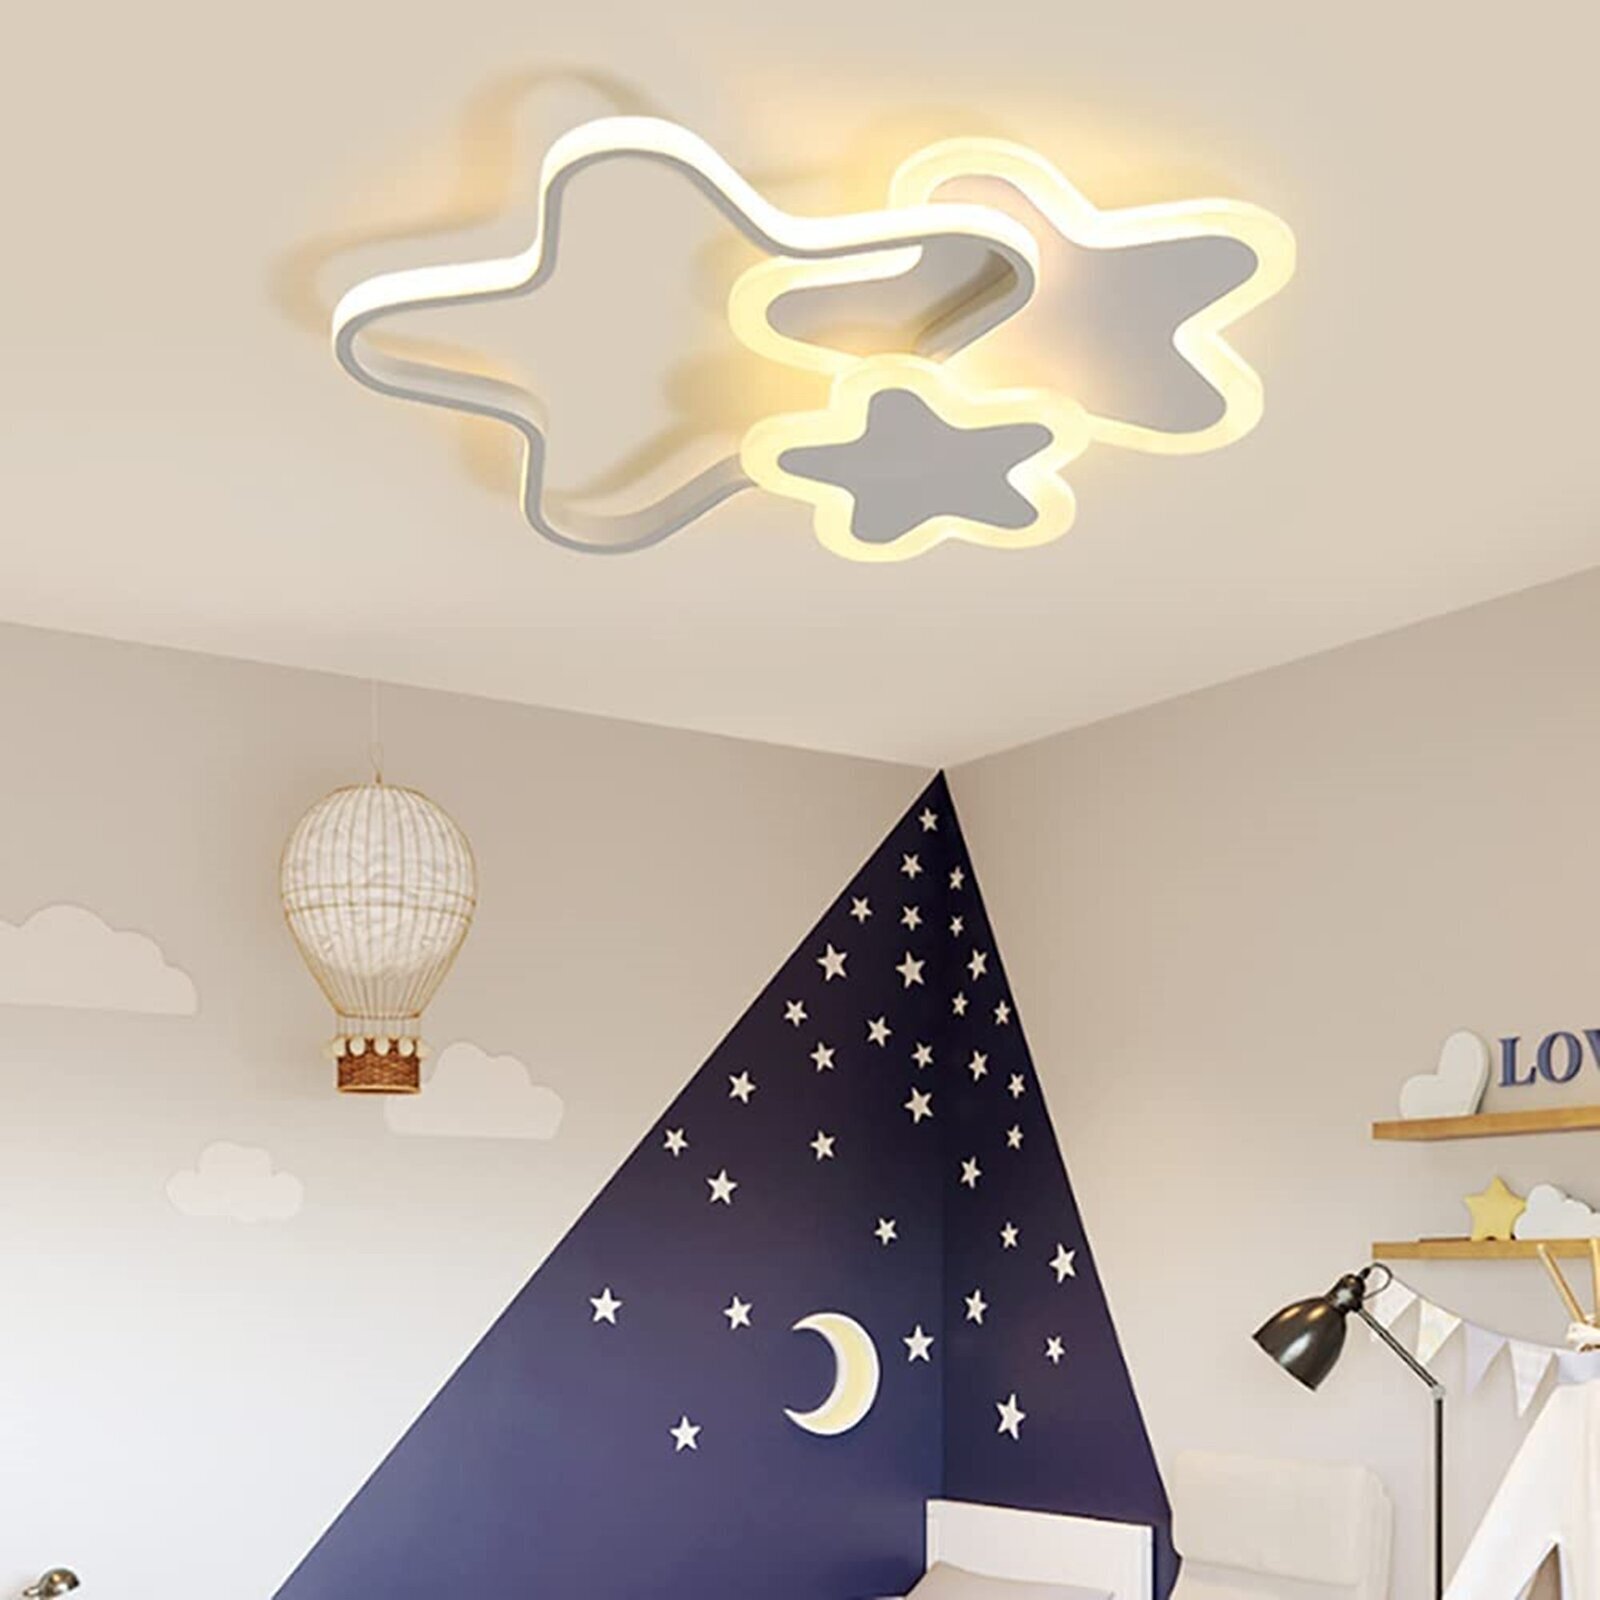 Nursery Friendly Cloud Shaped Star Light Fixtures